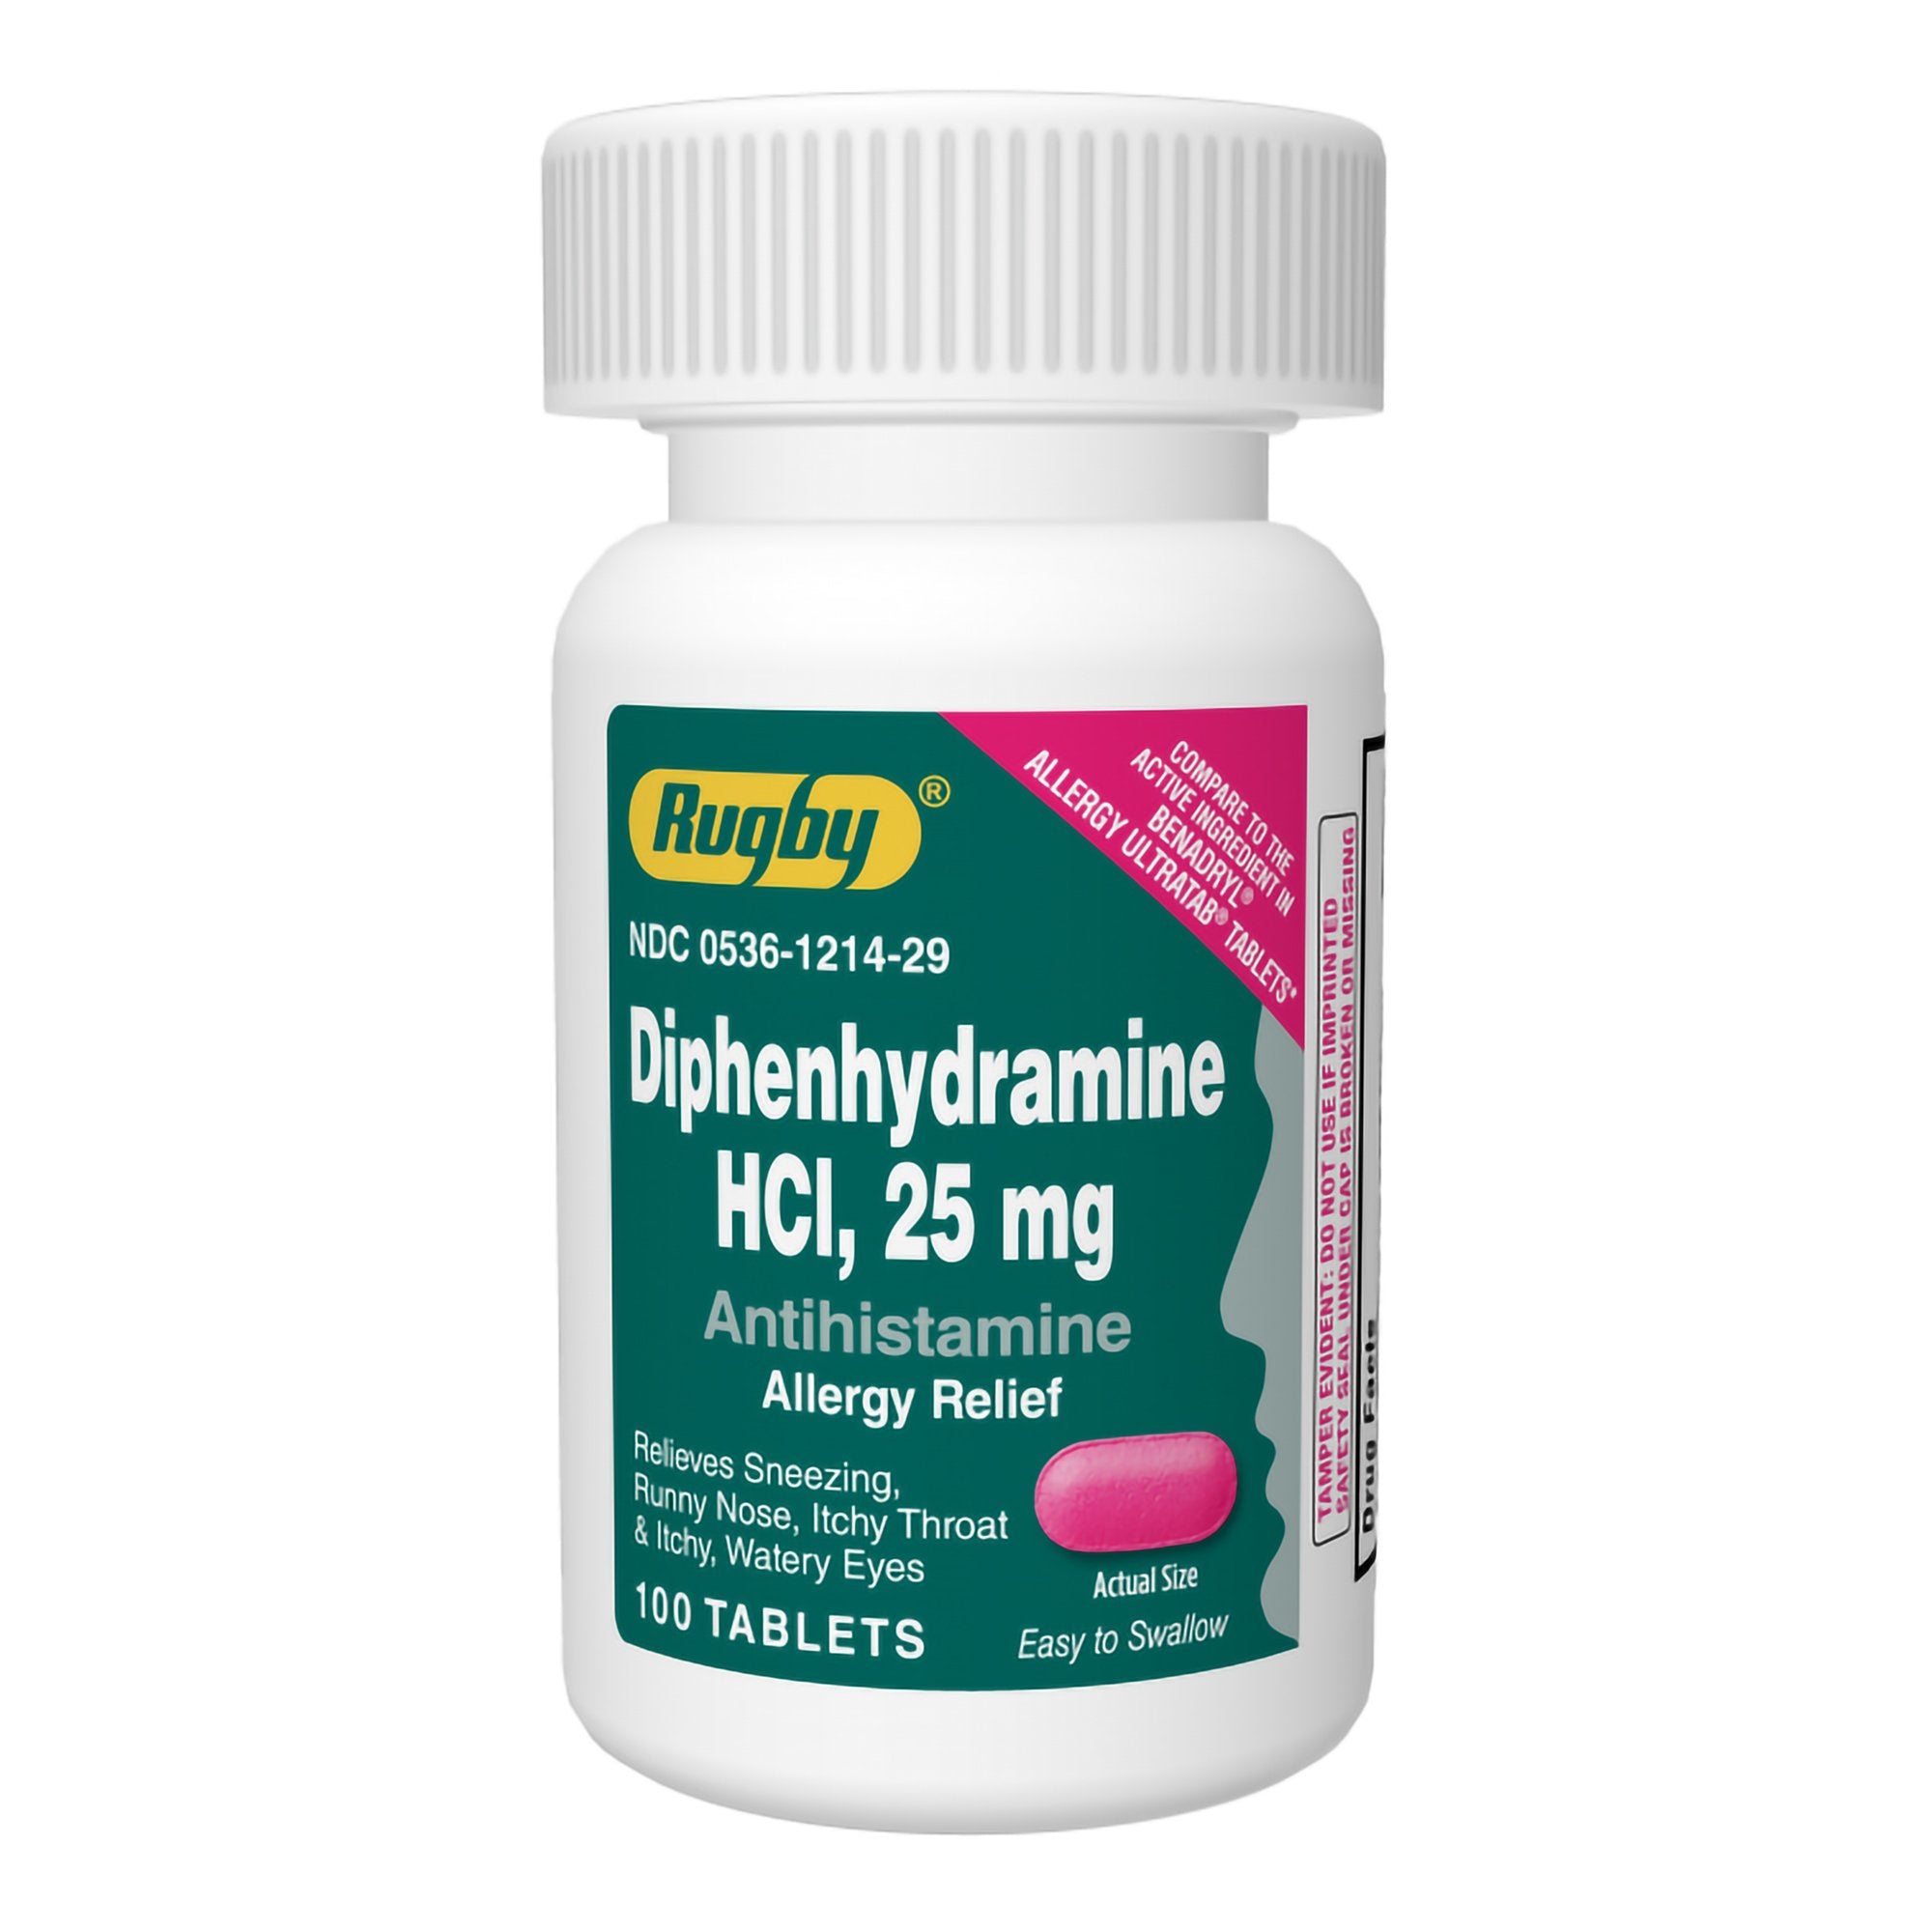 Rugby® Diphenhydramine Antihistamine (1 Unit)